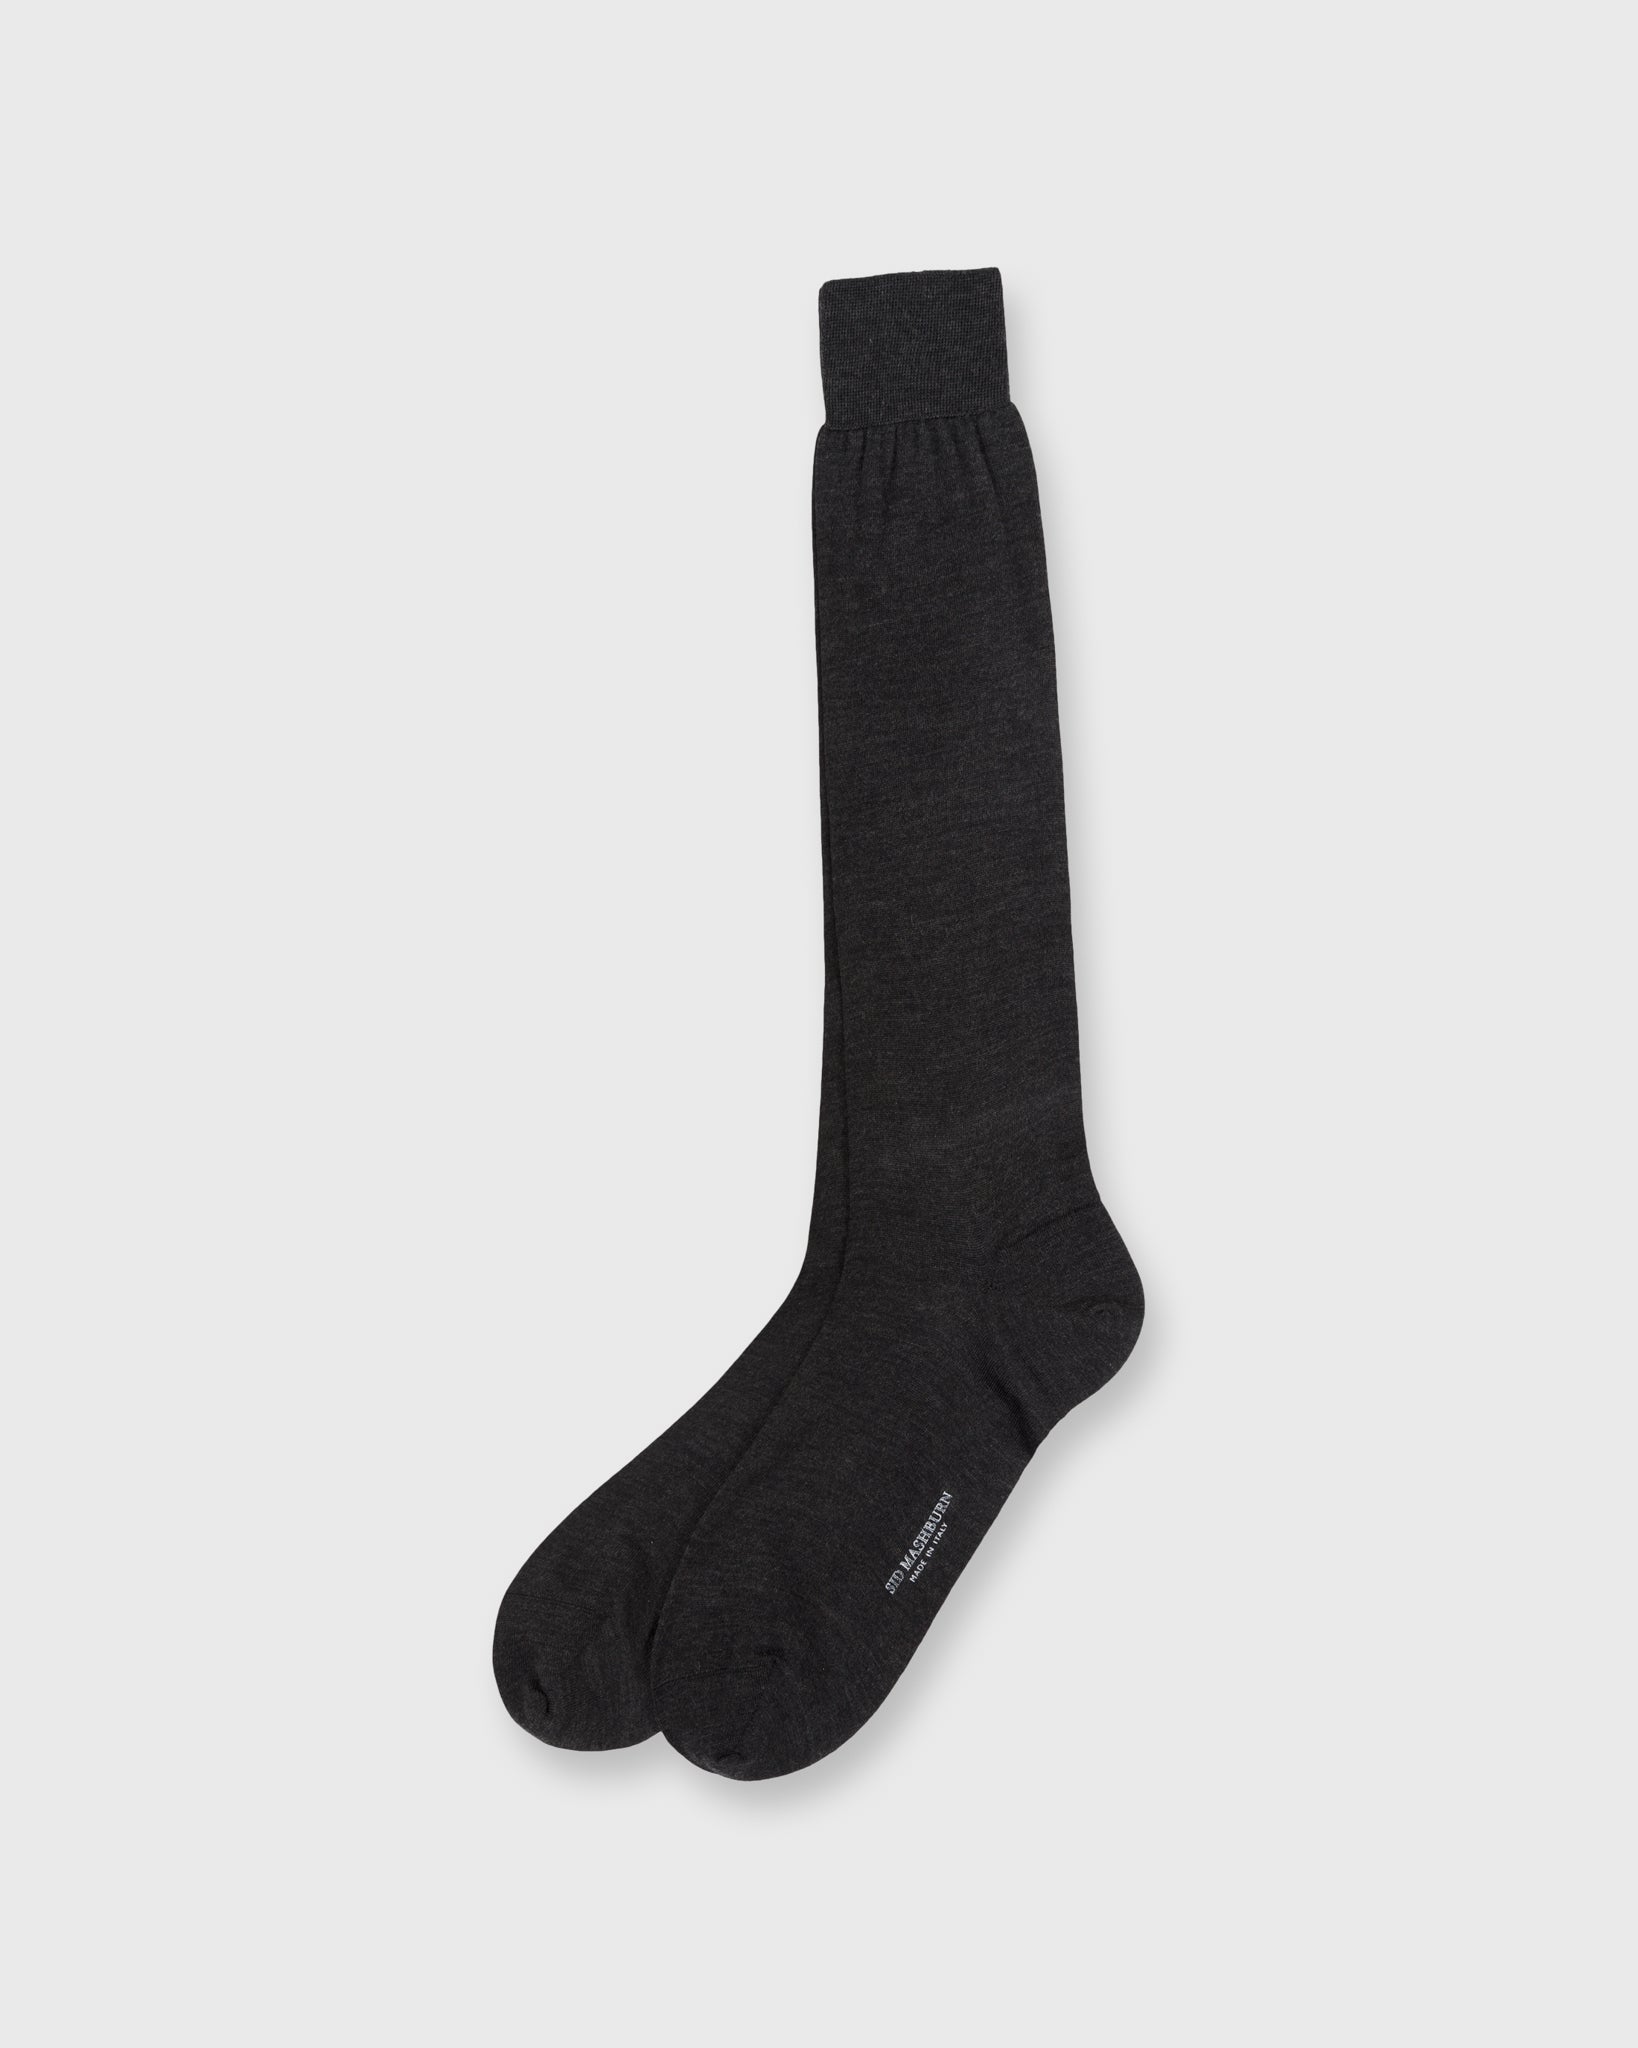 Over-The-Calf Dress Socks Heather Charcoal Cashmere/Silk